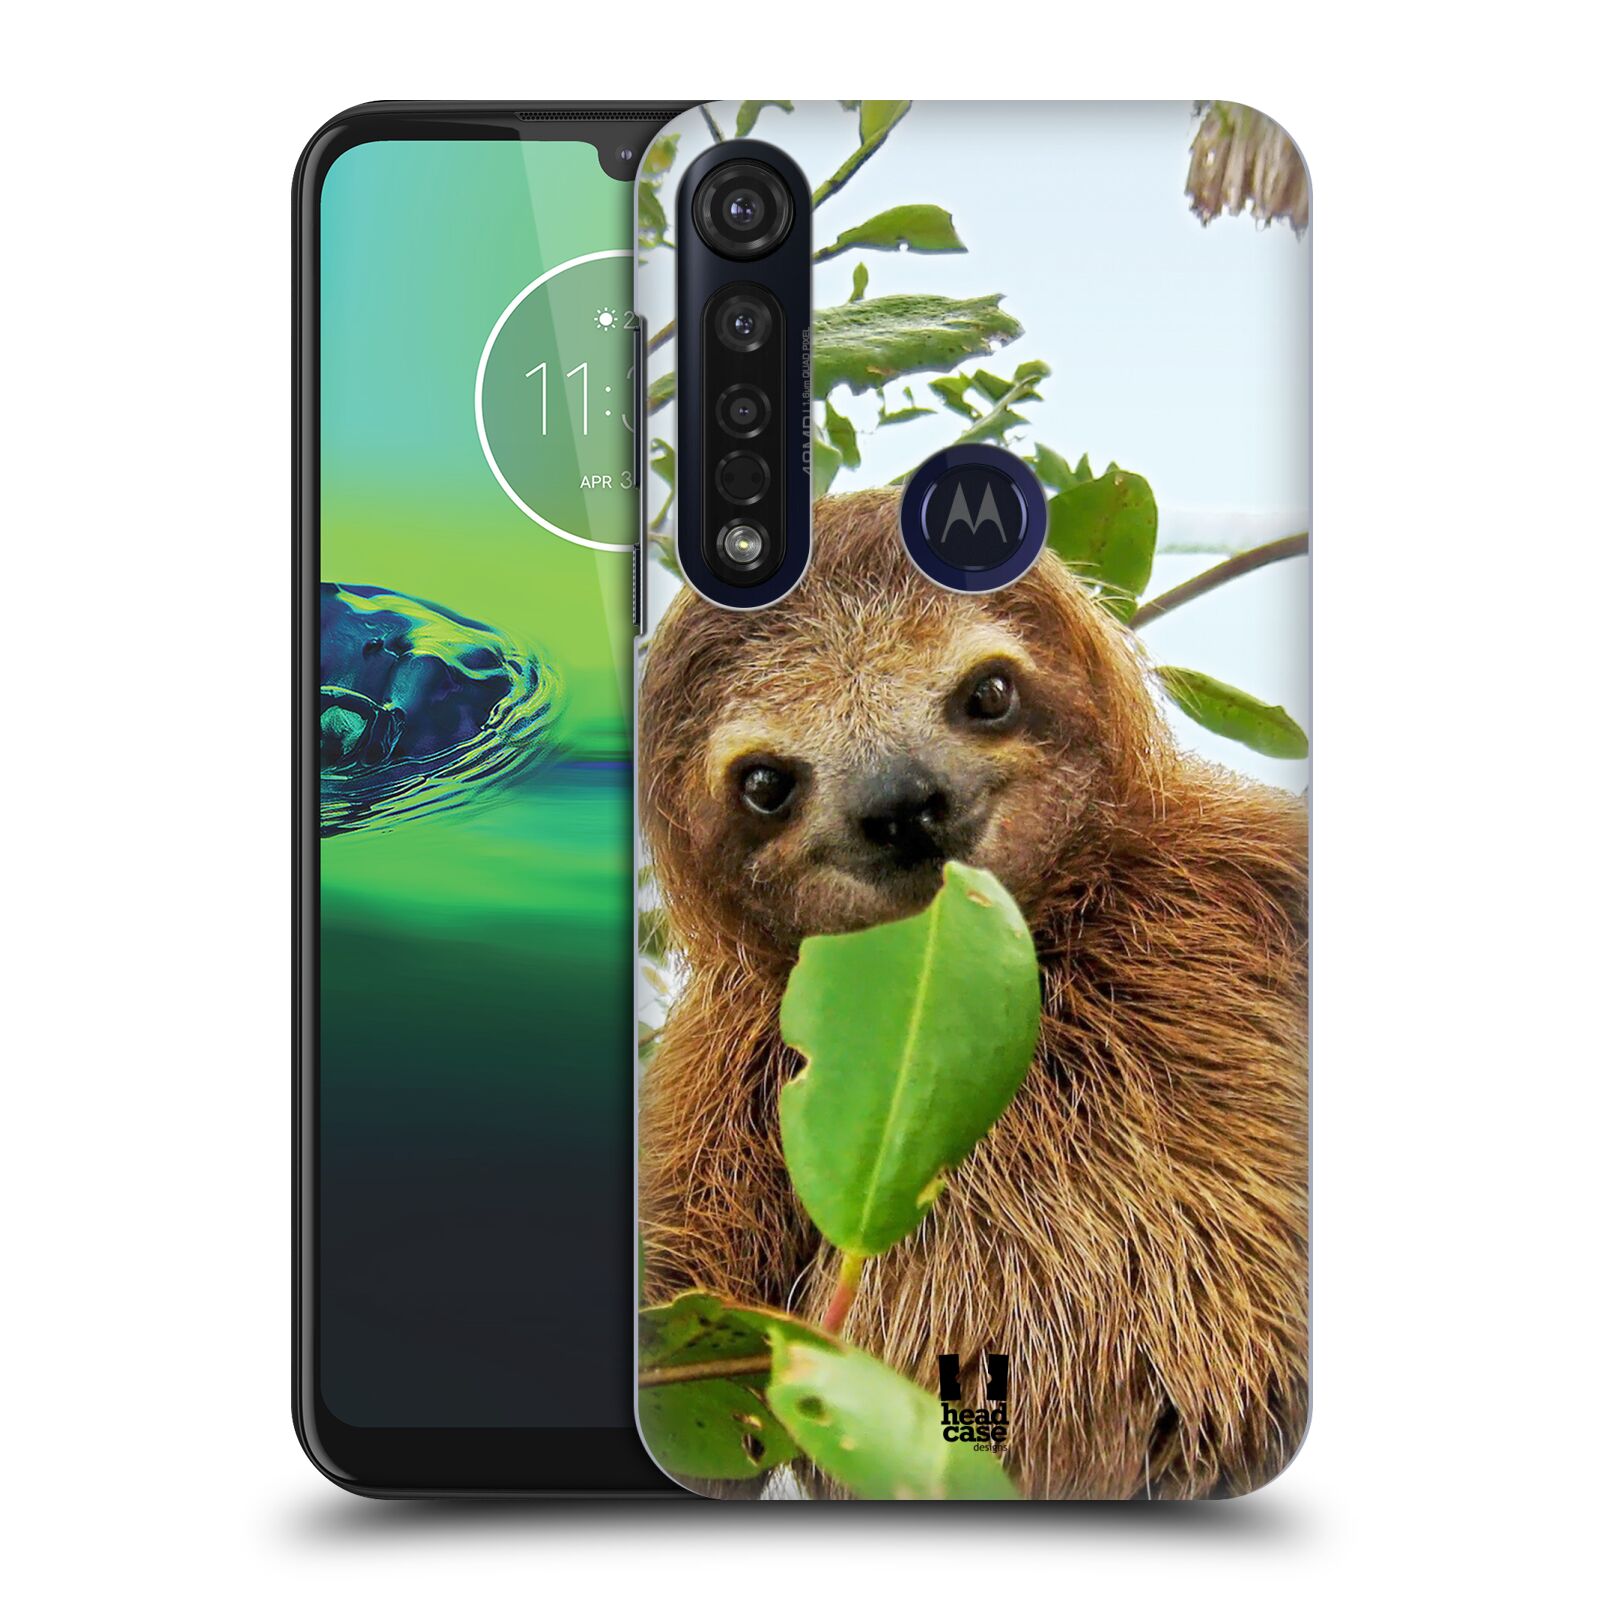 Pouzdro na mobil Motorola Moto G8 PLUS - HEAD CASE - vzor slavná zvířata foto lenochod